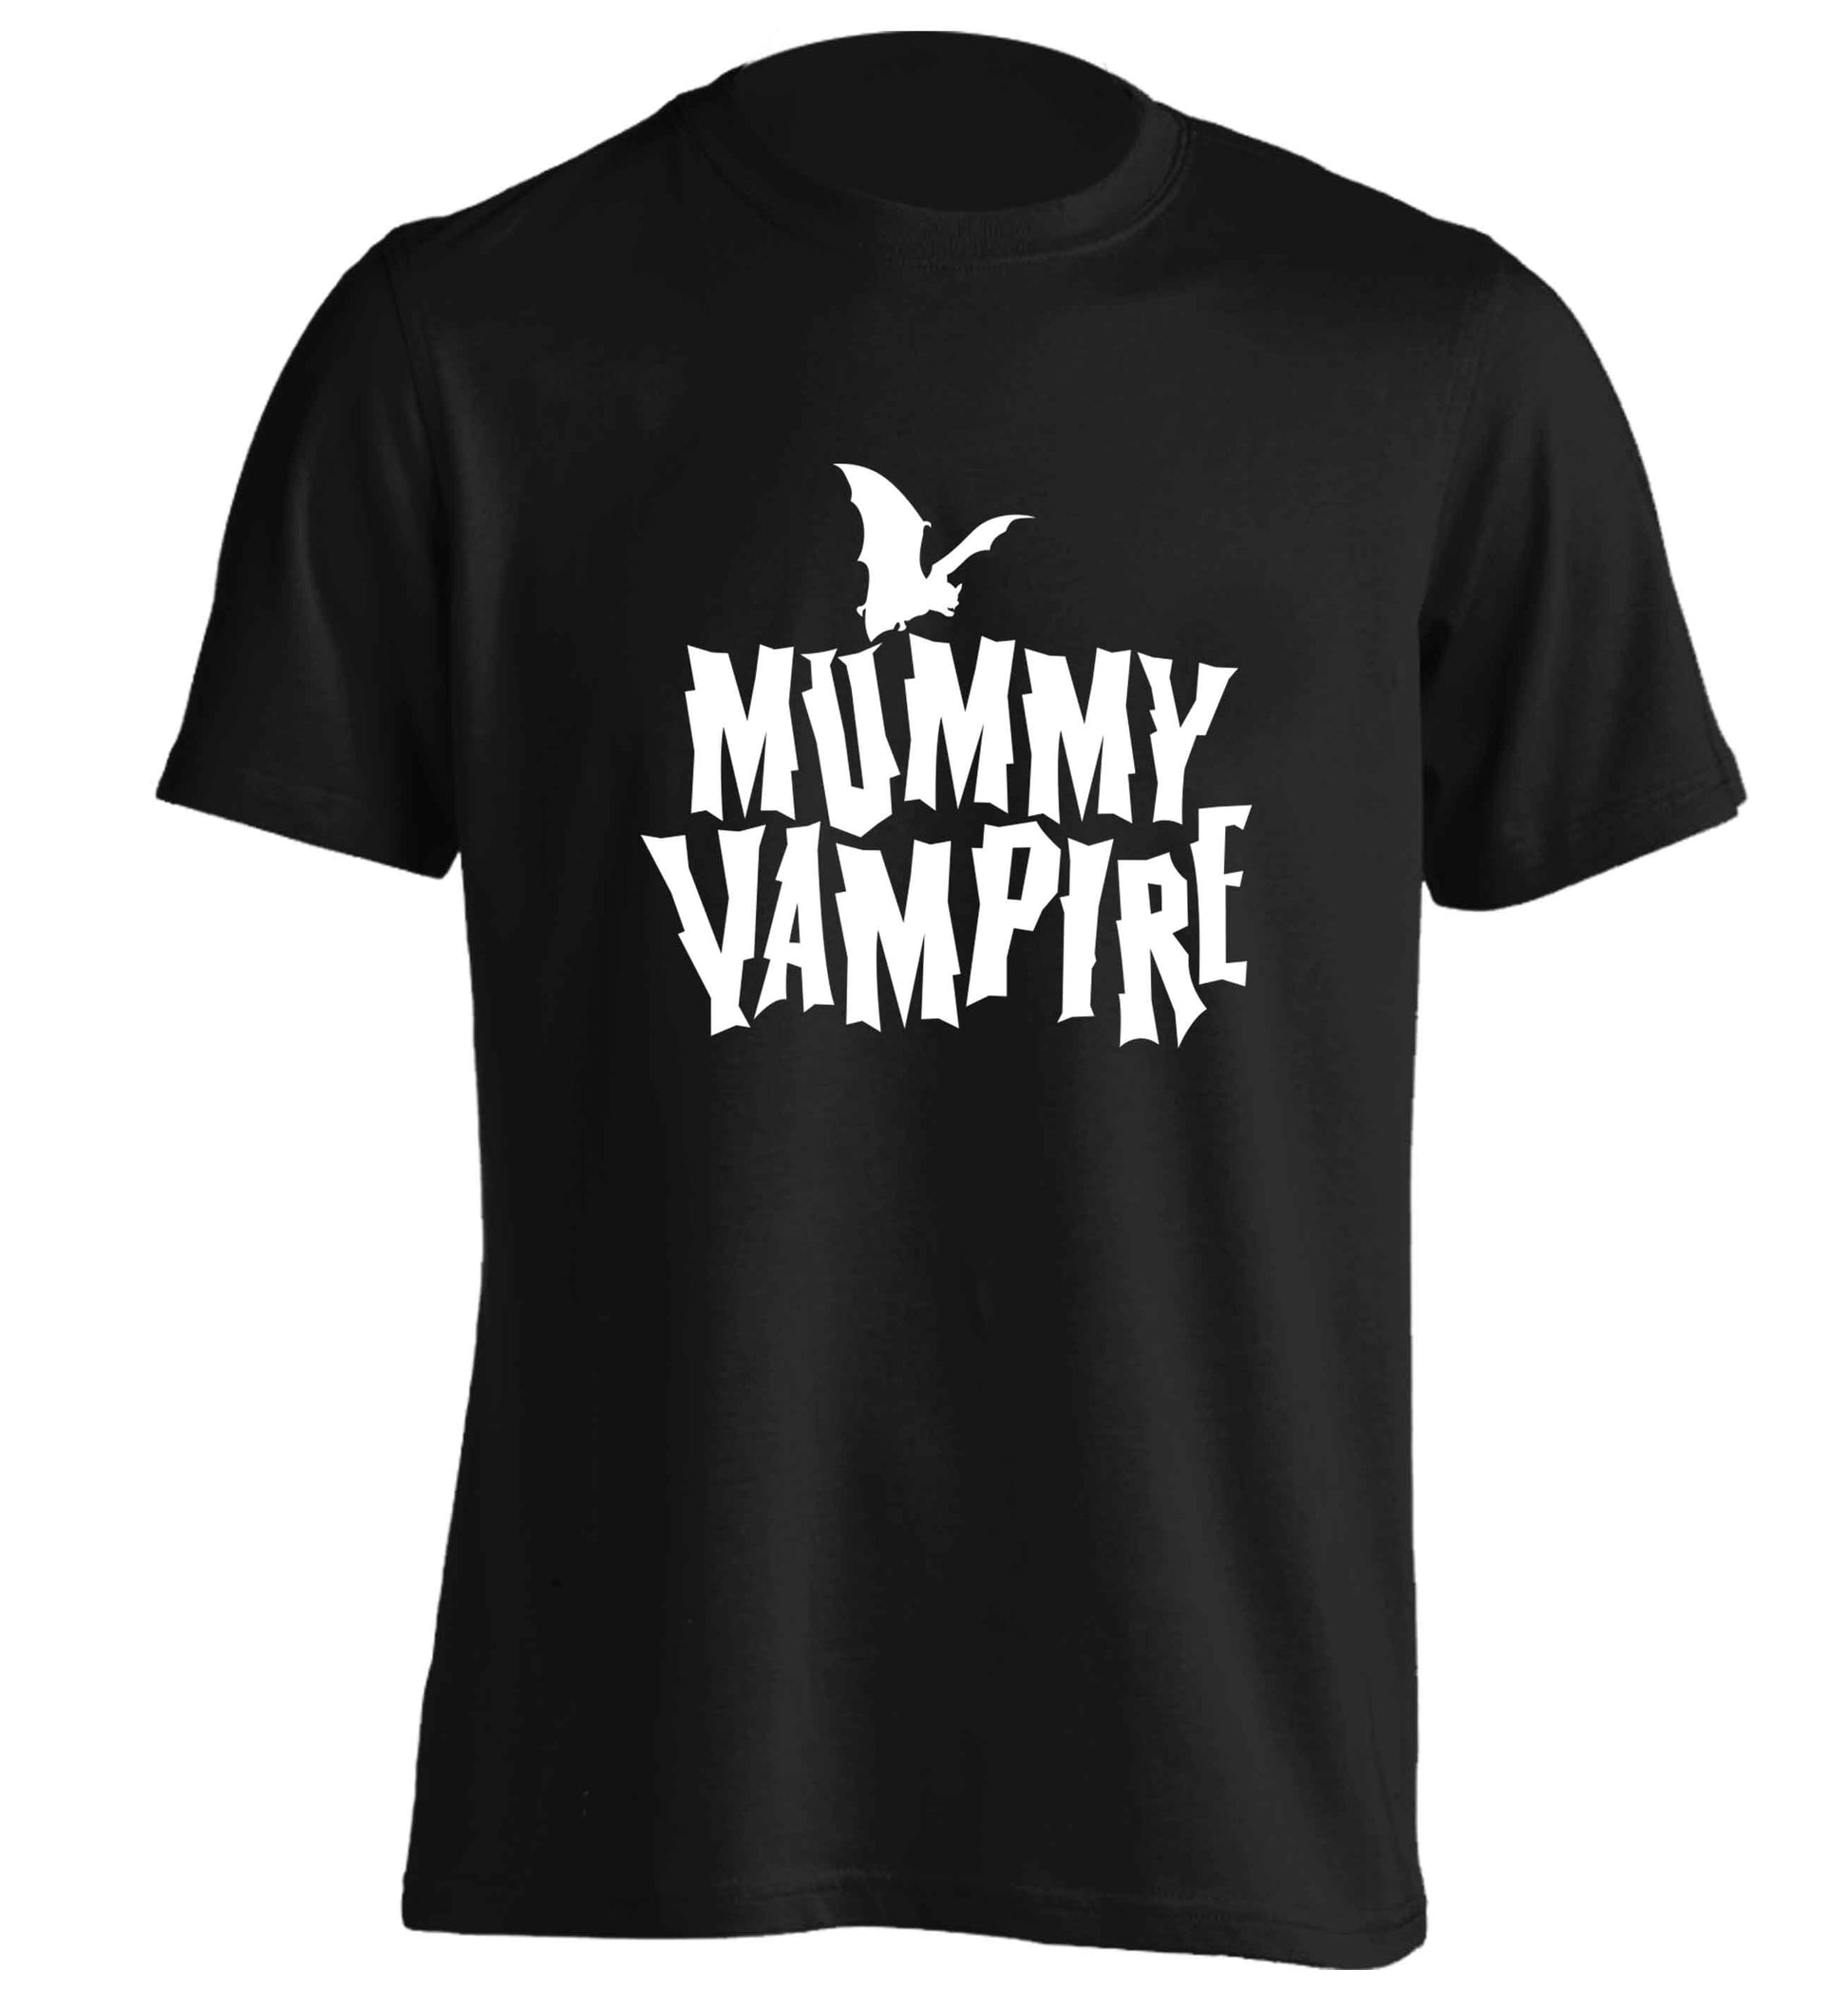 Mummy vampire adults unisex black Tshirt 2XL